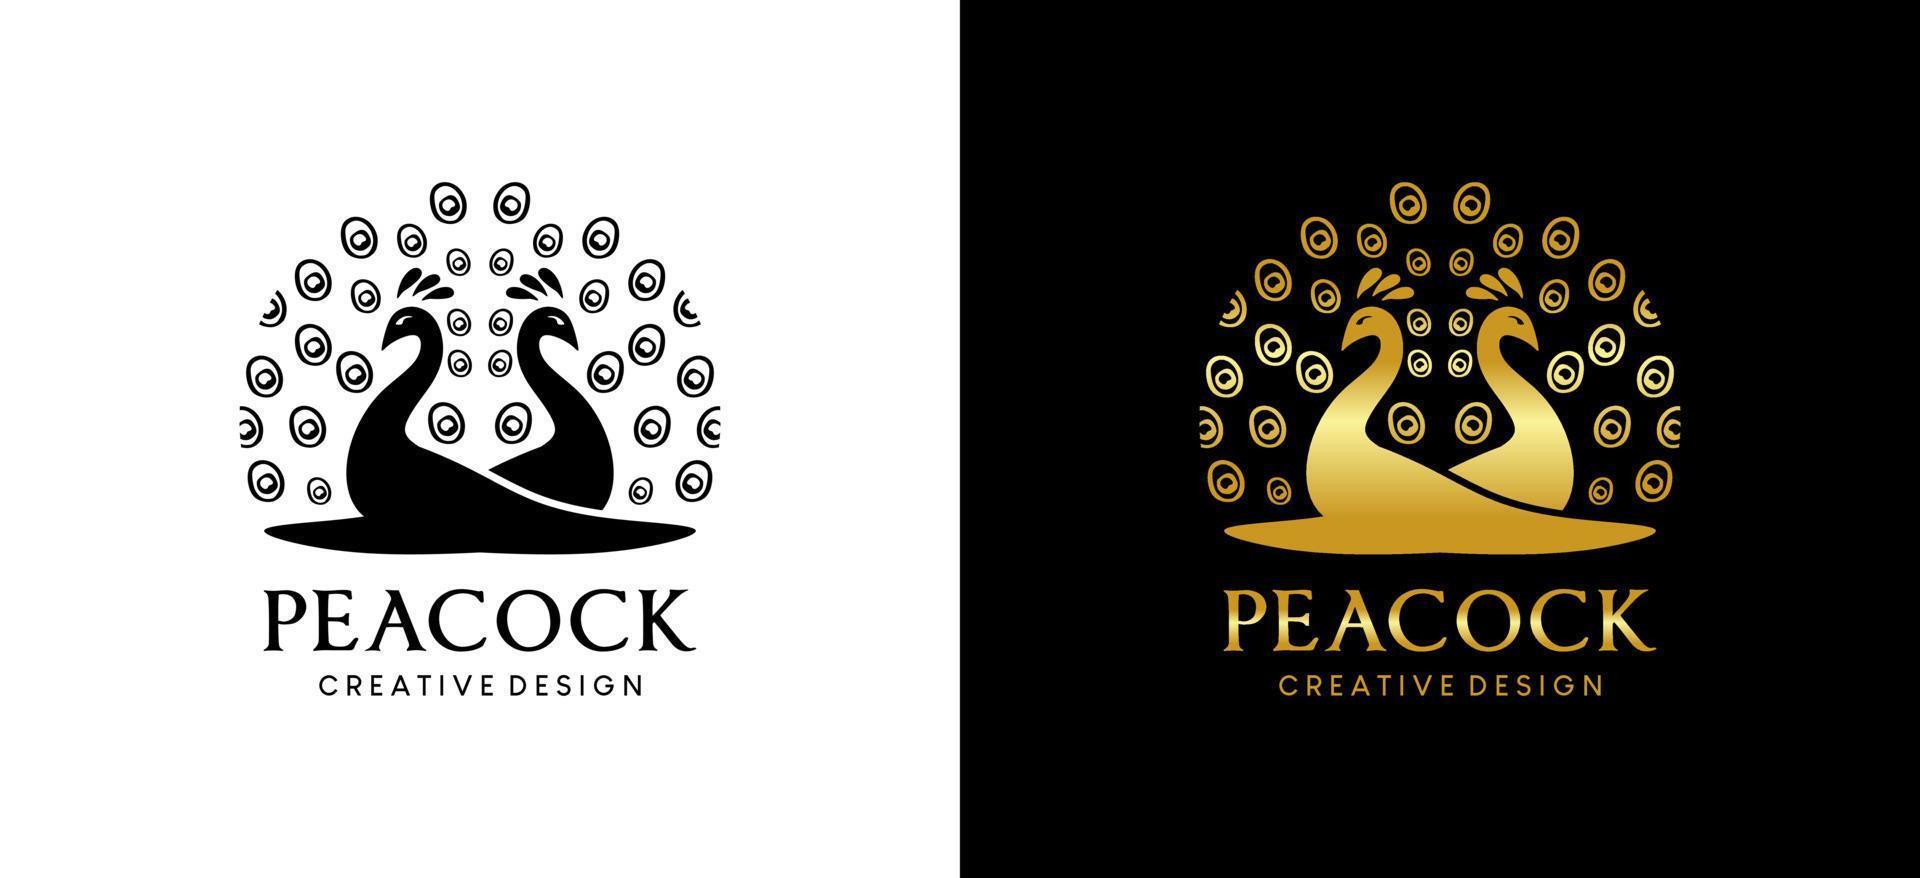 Peacock logo design in creative luxury silhouette style vector